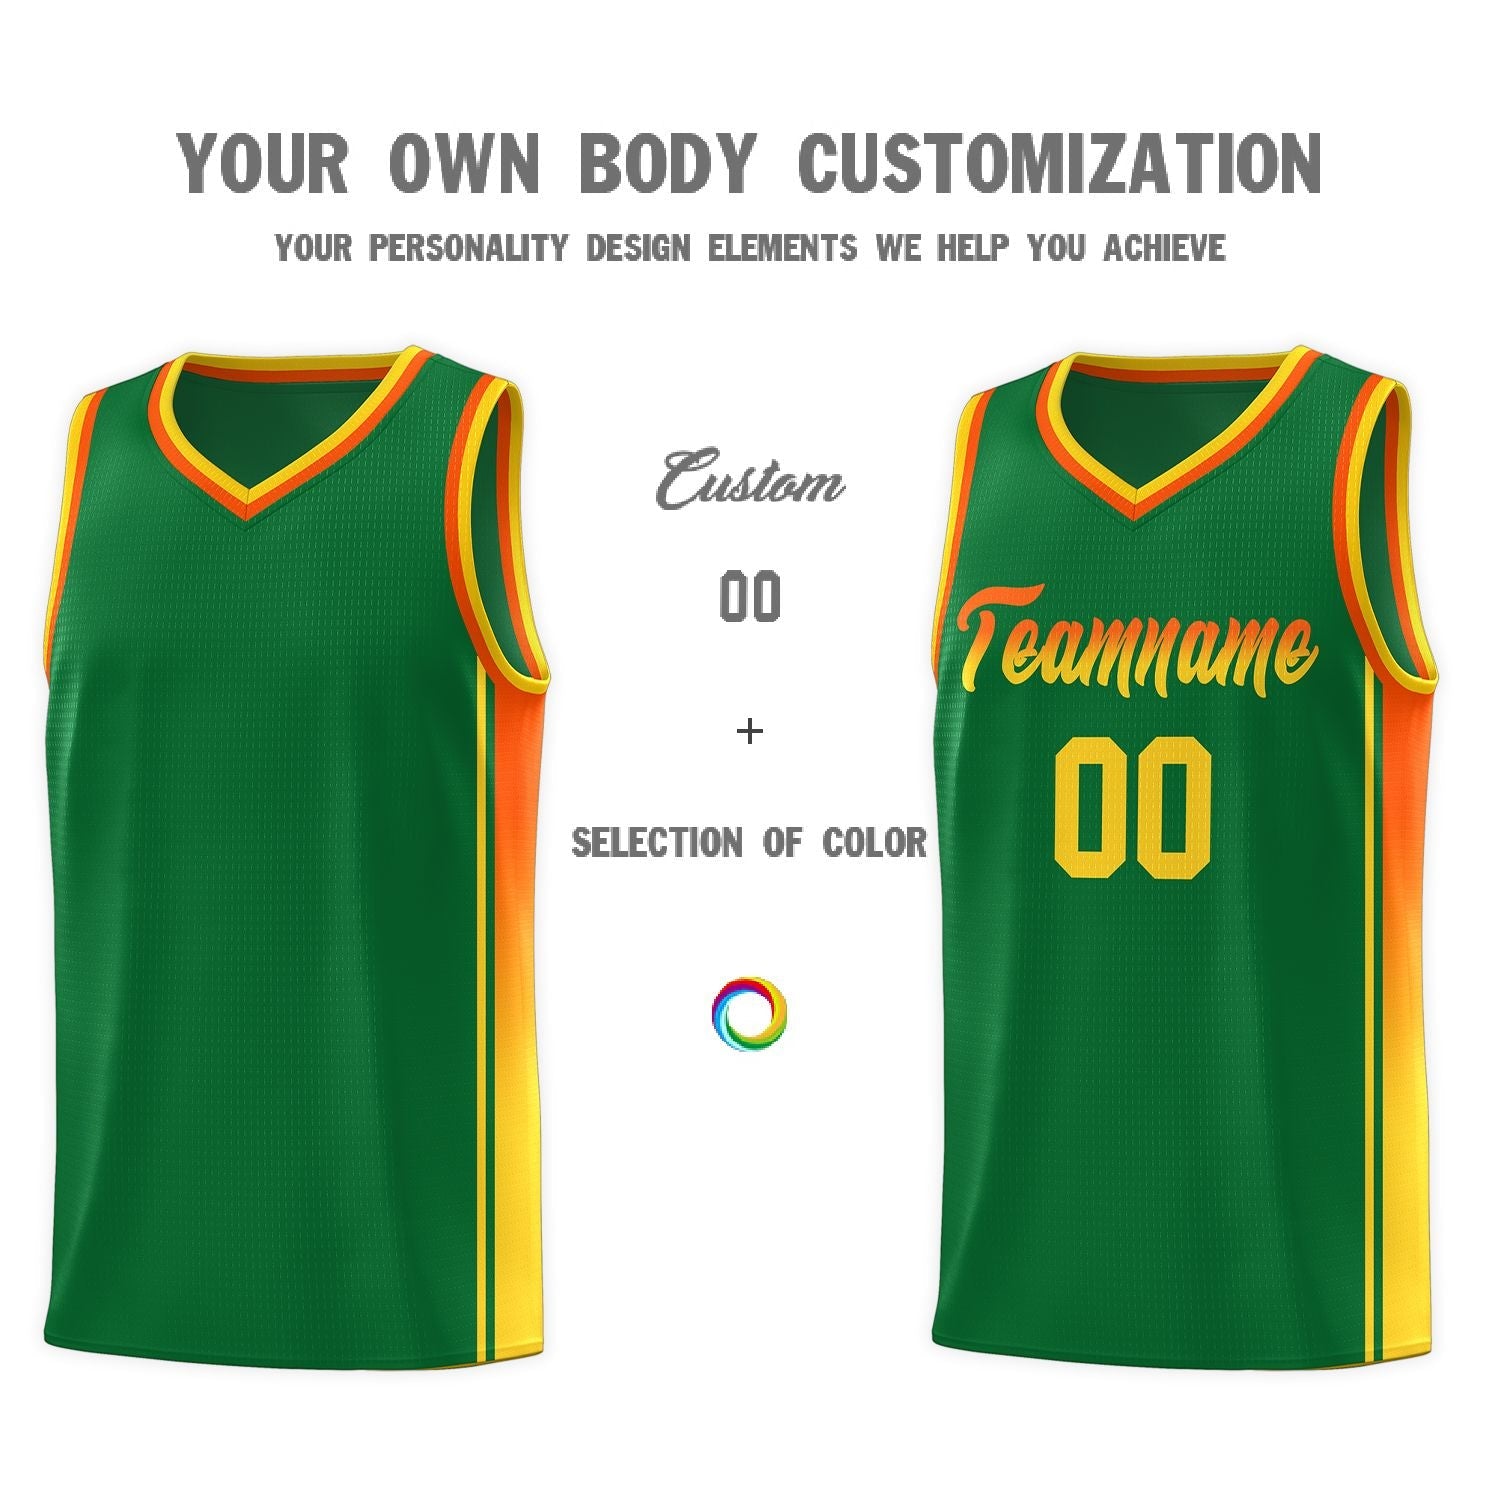 Custom Kelly Green Orange-Gold Gradient Fashion Sports Uniform Basketball Jersey